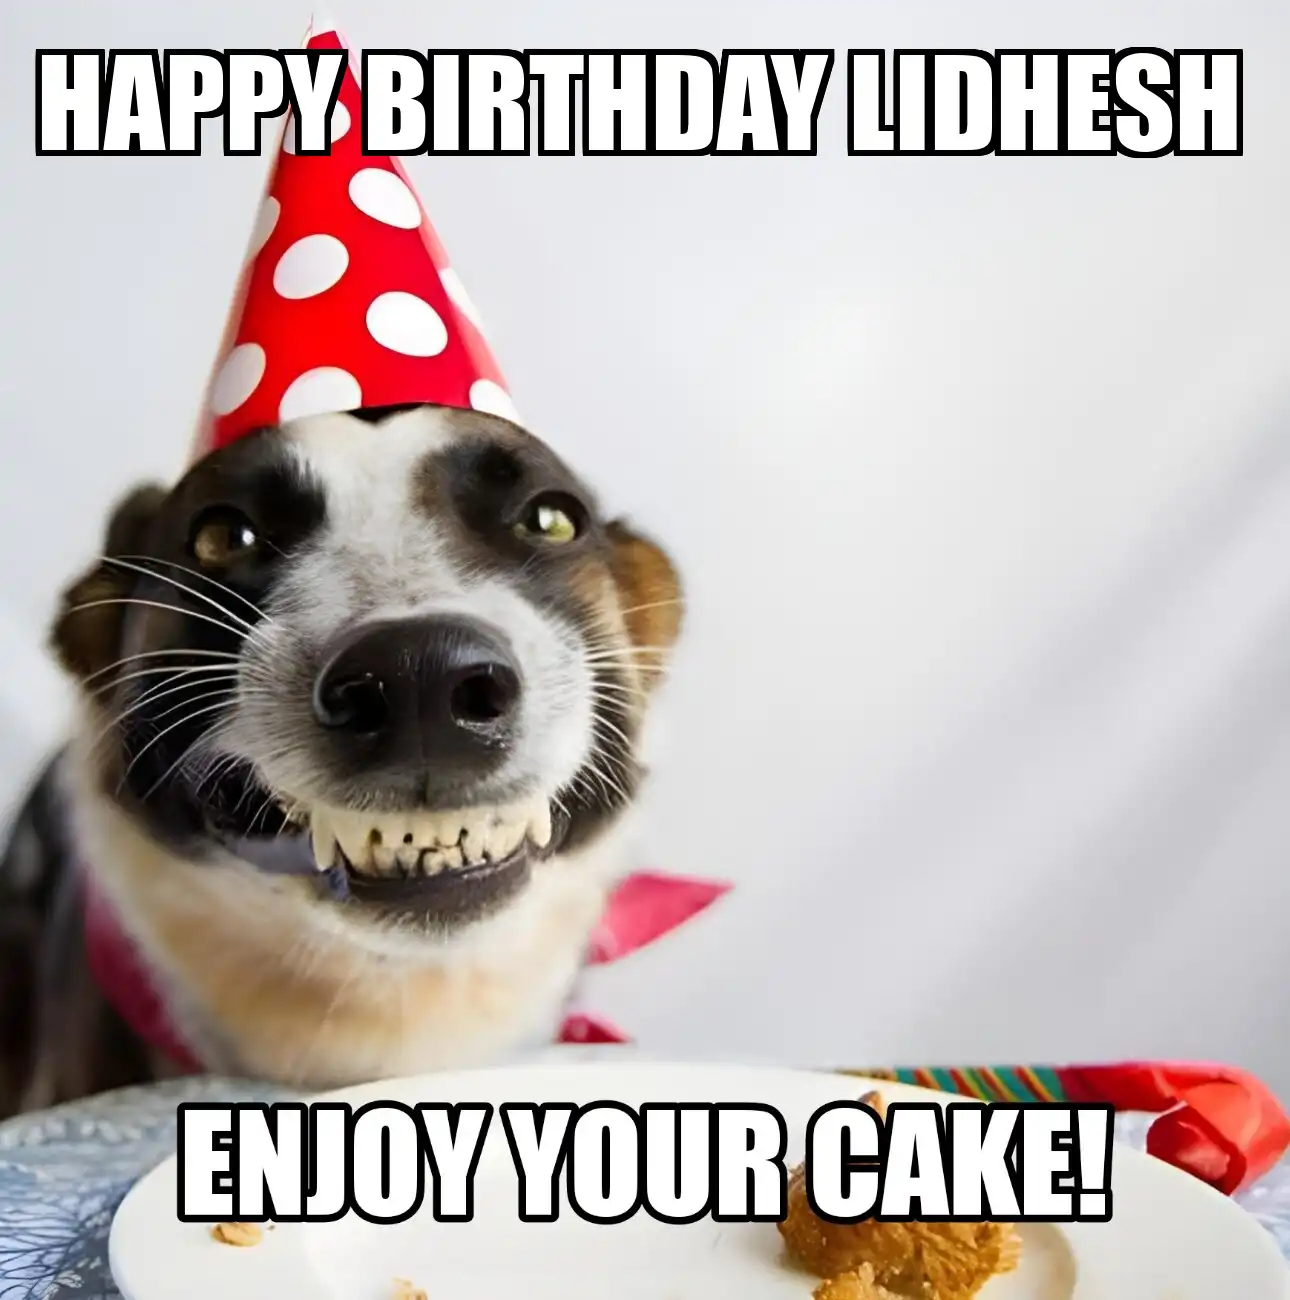 Happy Birthday Lidhesh Enjoy Your Cake Dog Meme